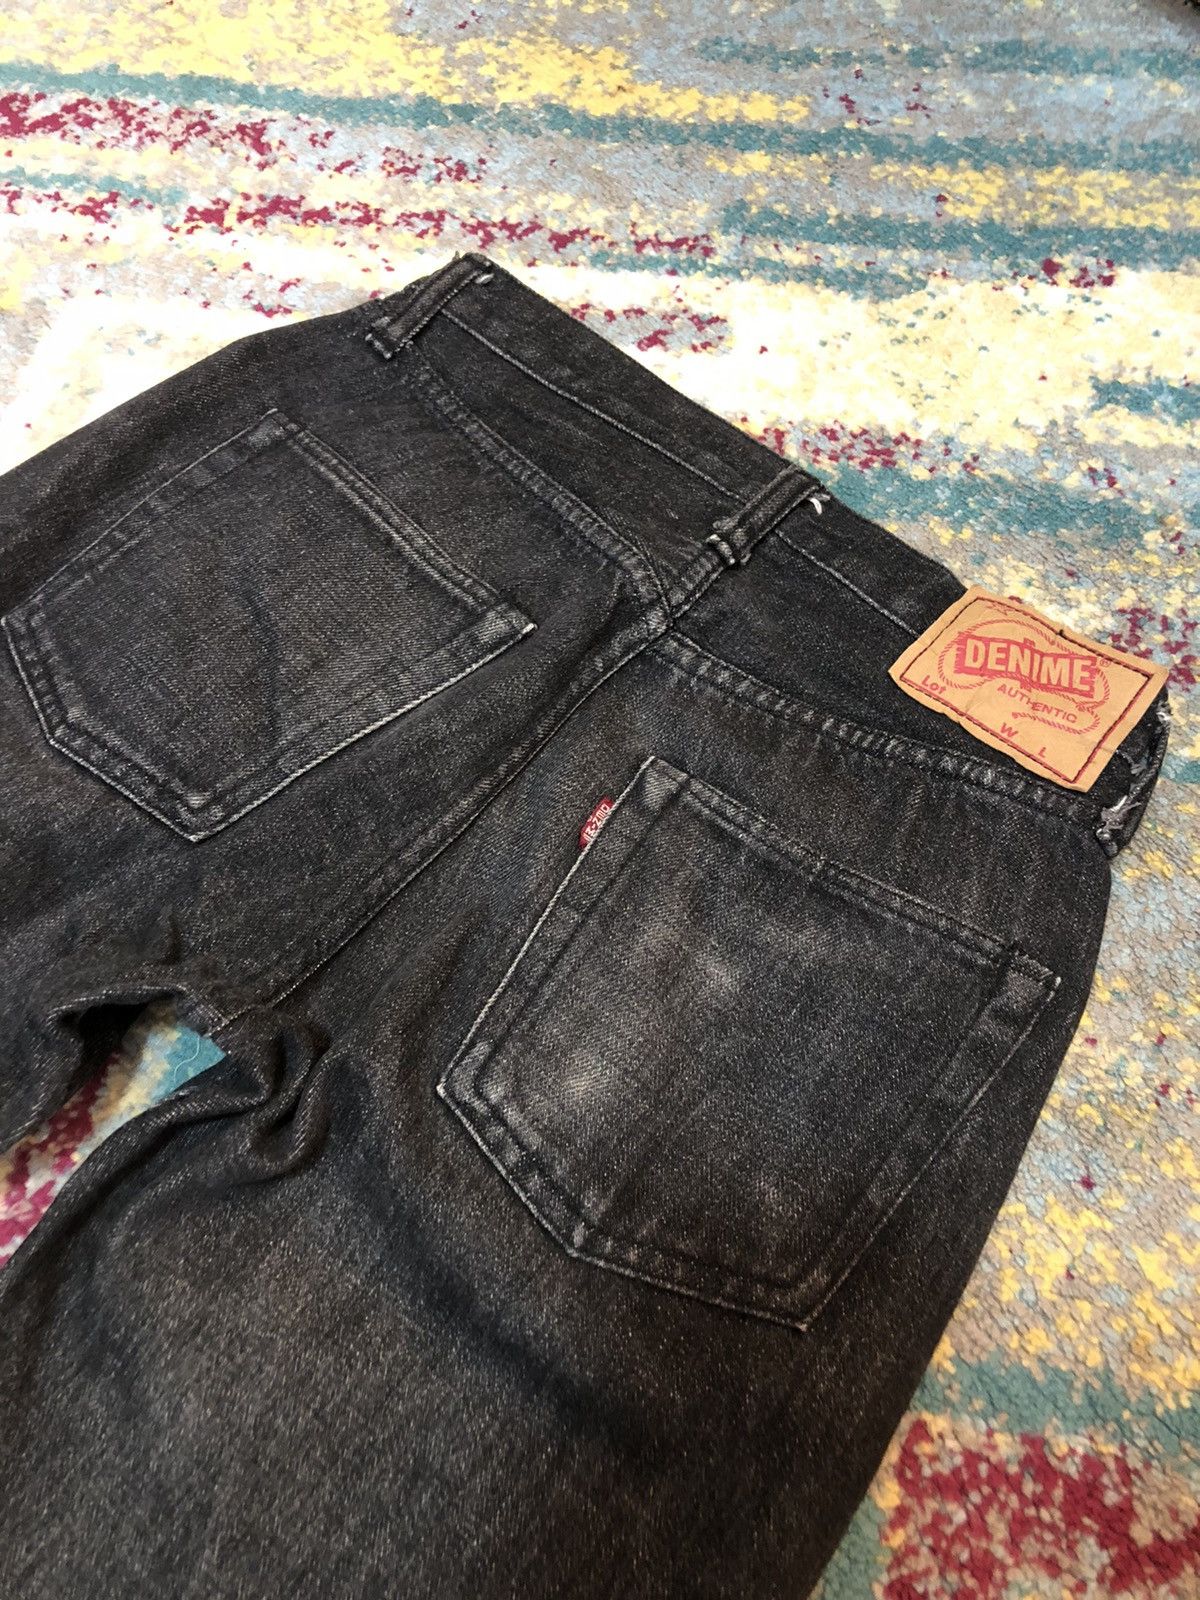 Denime selvedge jeans super black - 4